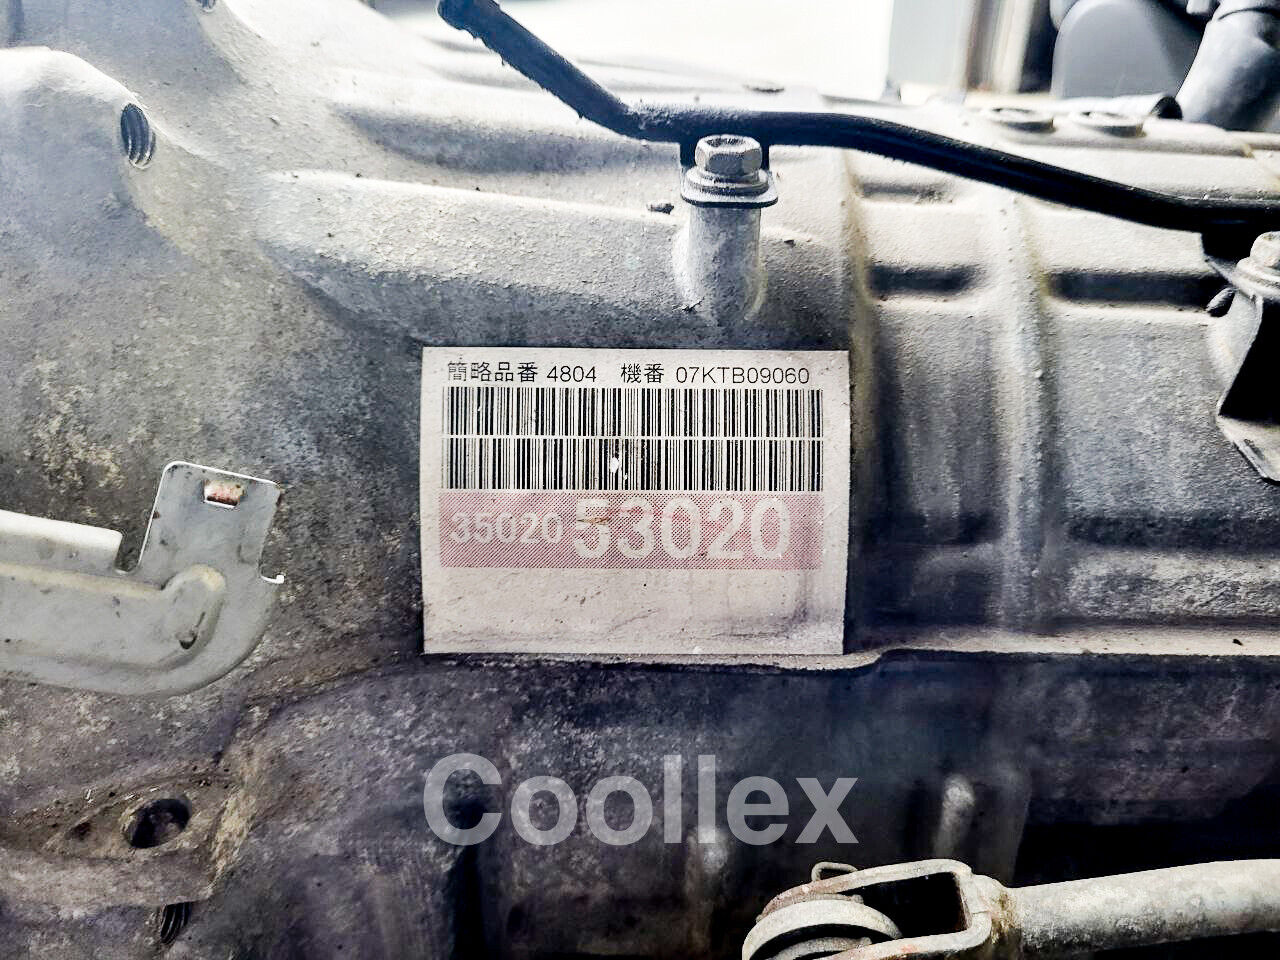 06-13 Lexus Is250 Awd Transmission A/T w/Transfer Case 140k-m 35030-53020 Oem